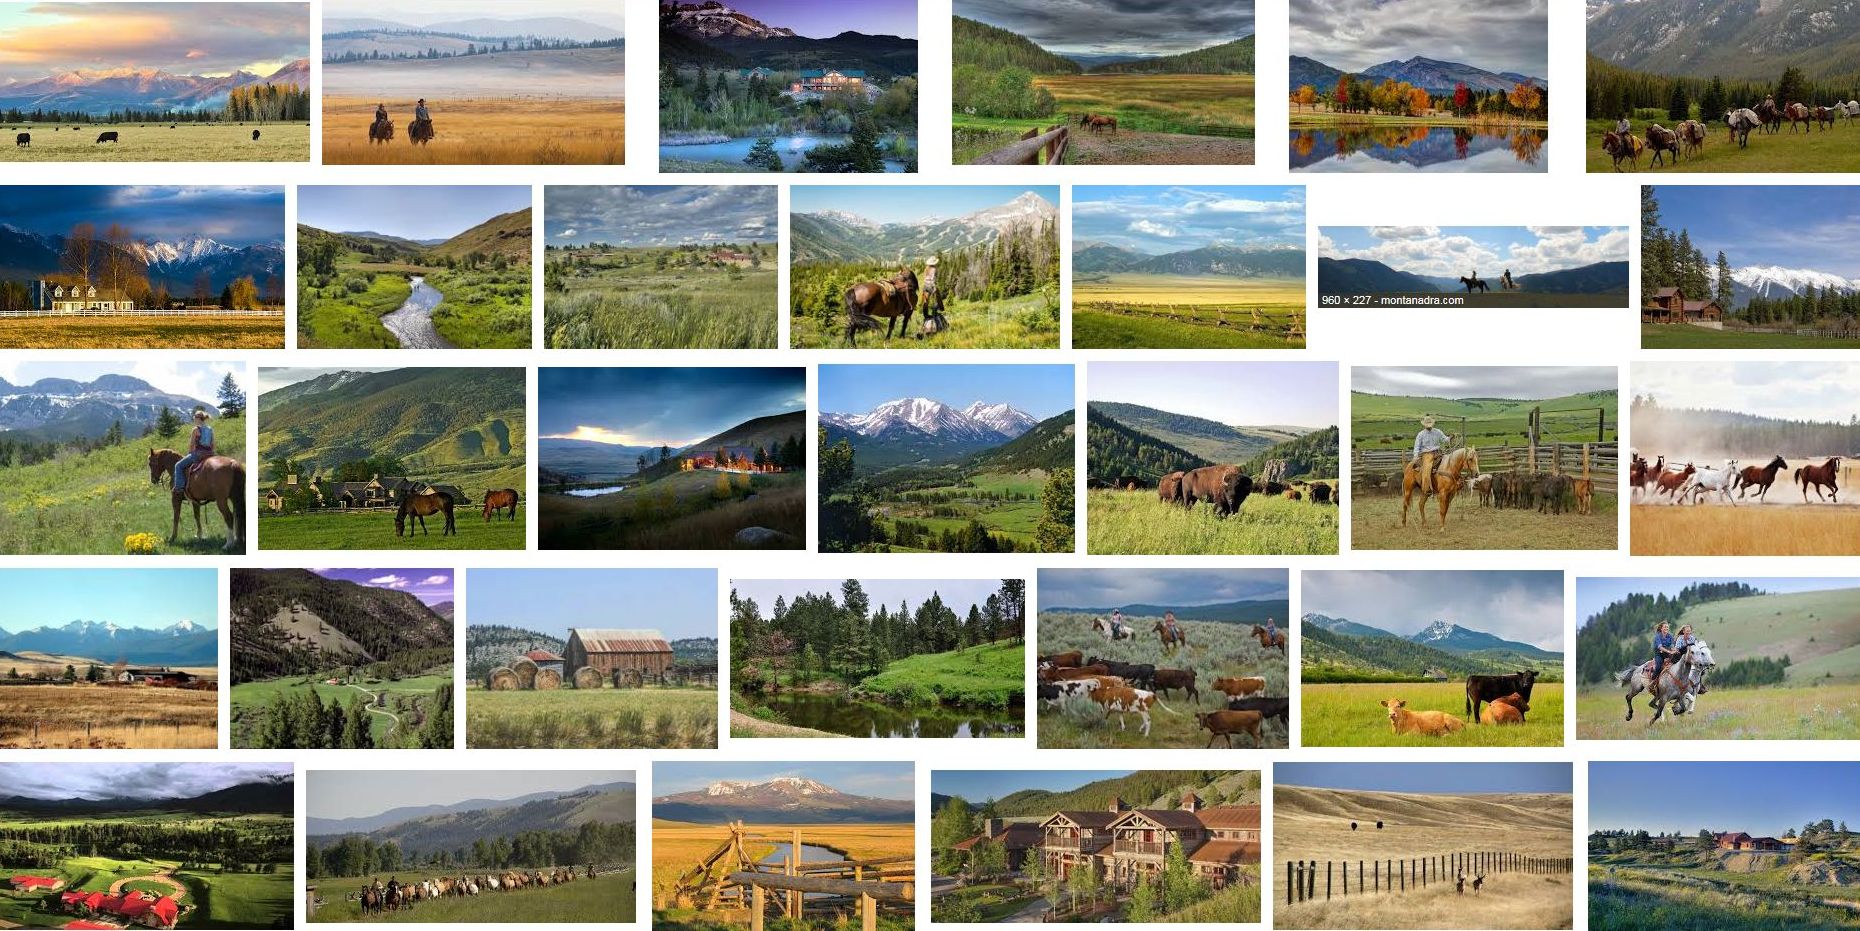 Montana Ranch Listings $200,000 To $300,000